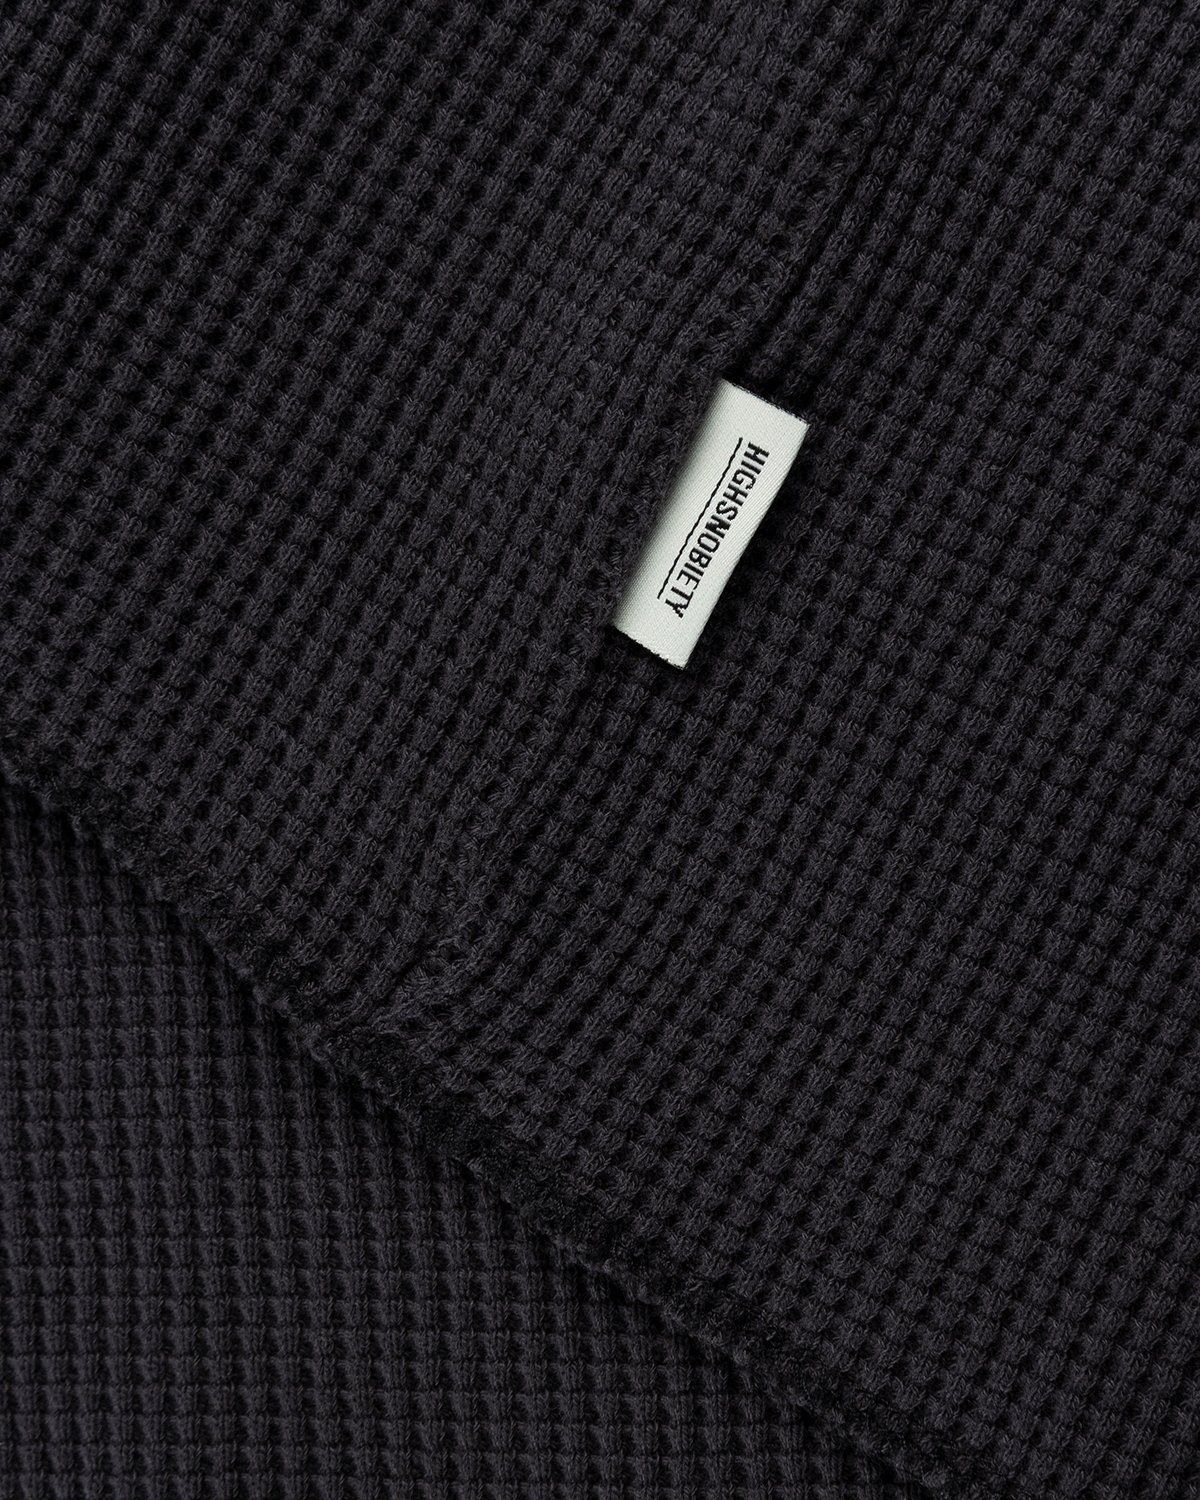 Highsnobiety – Thermal Staples Long Sleeve Black - Sweats - Black - Image 4